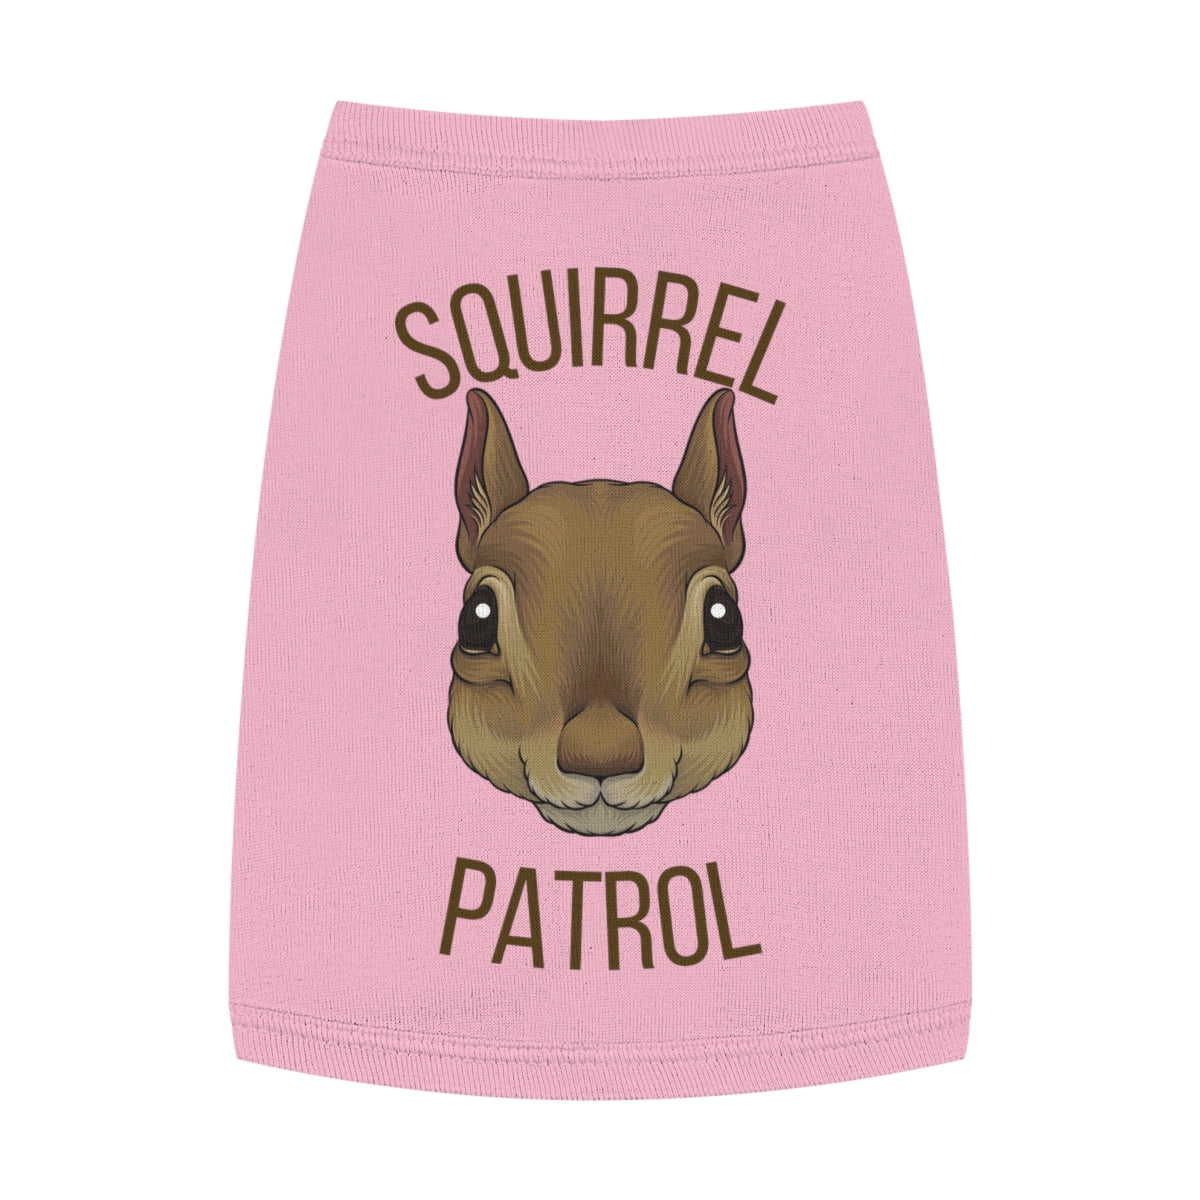 Squirrel Patrol Pet Tank Top